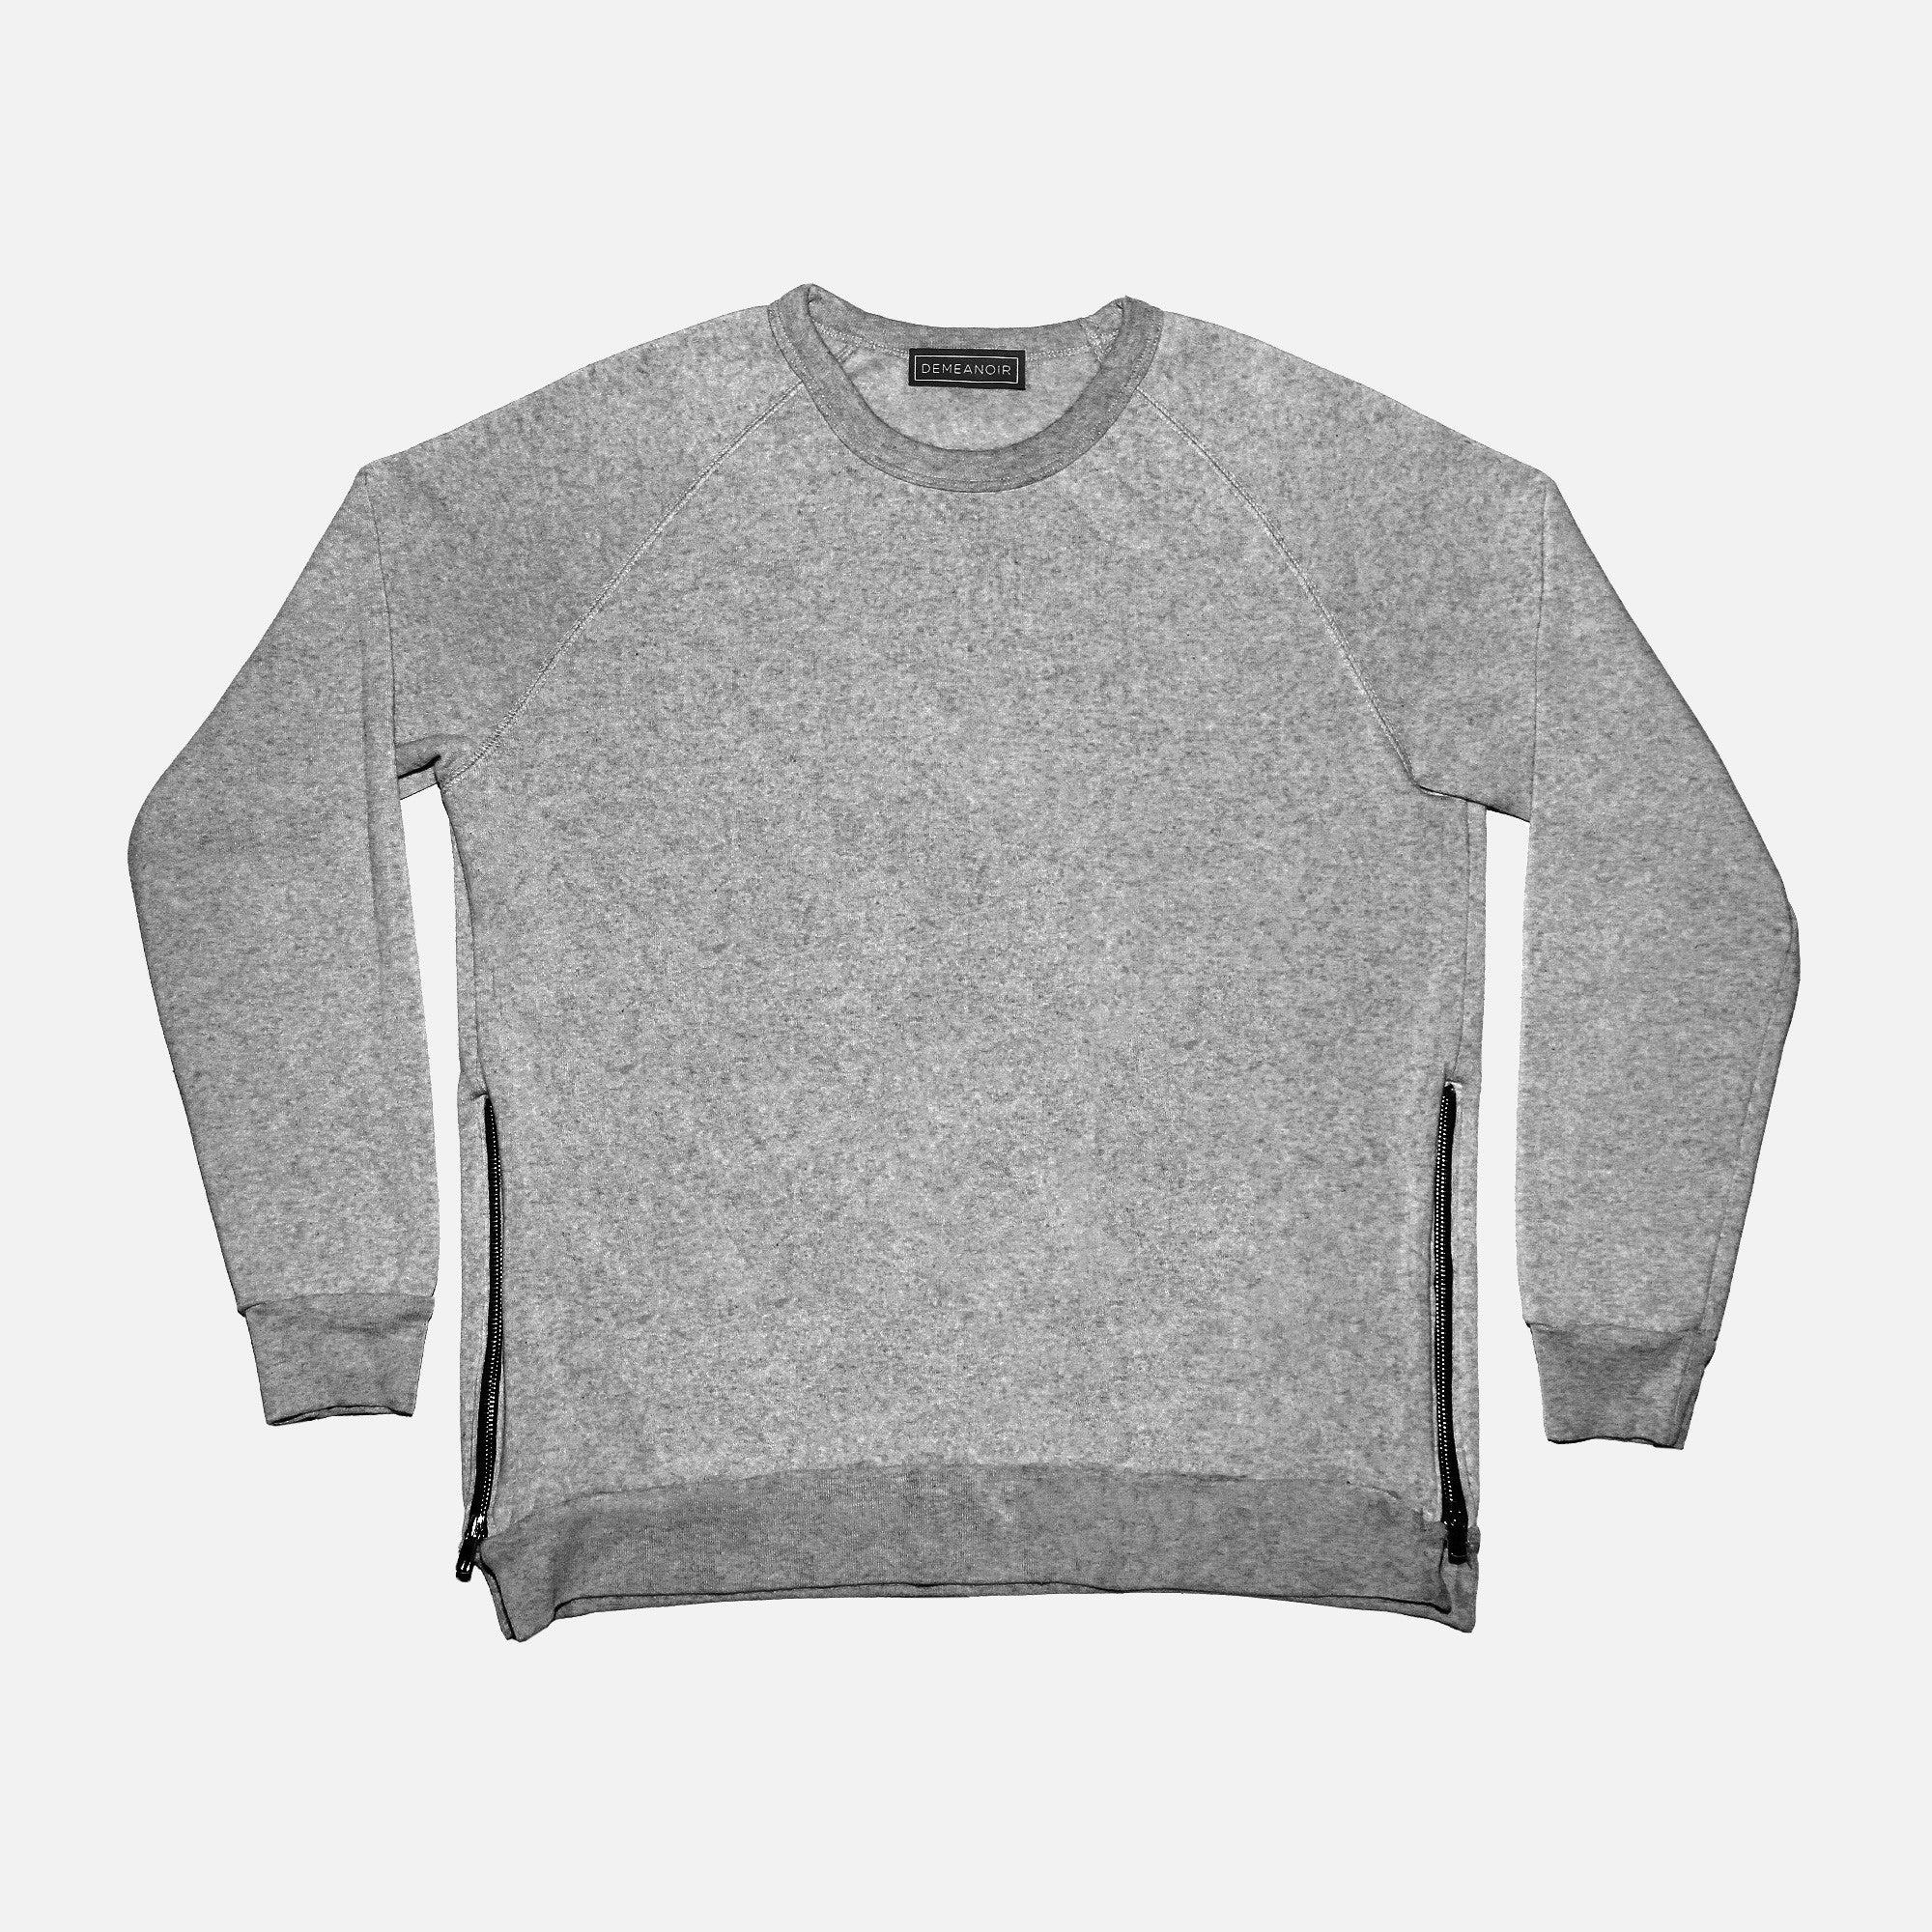 Tri-Blend Sweatshirt Grey - DEMEANOIR - 1